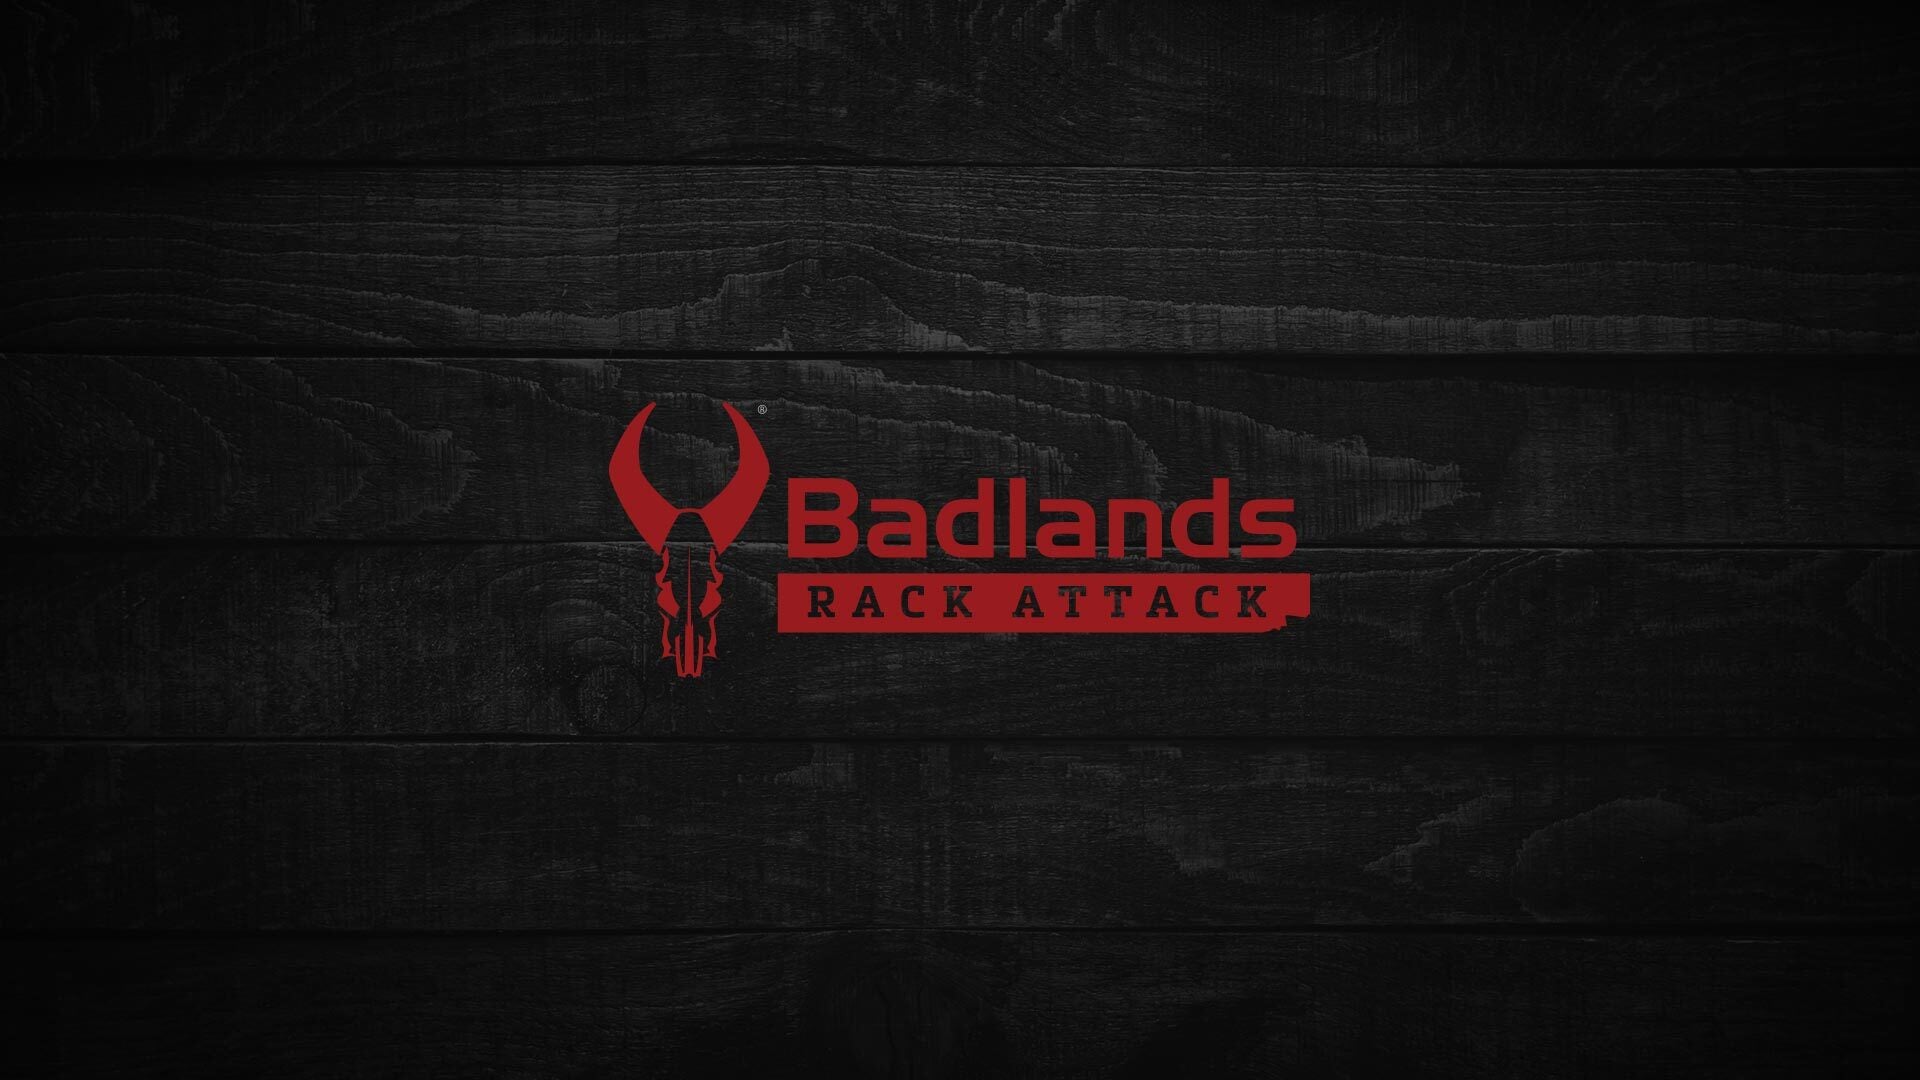 Badlands Rack Attack Season 3 Episode 2: Welcome to 2021